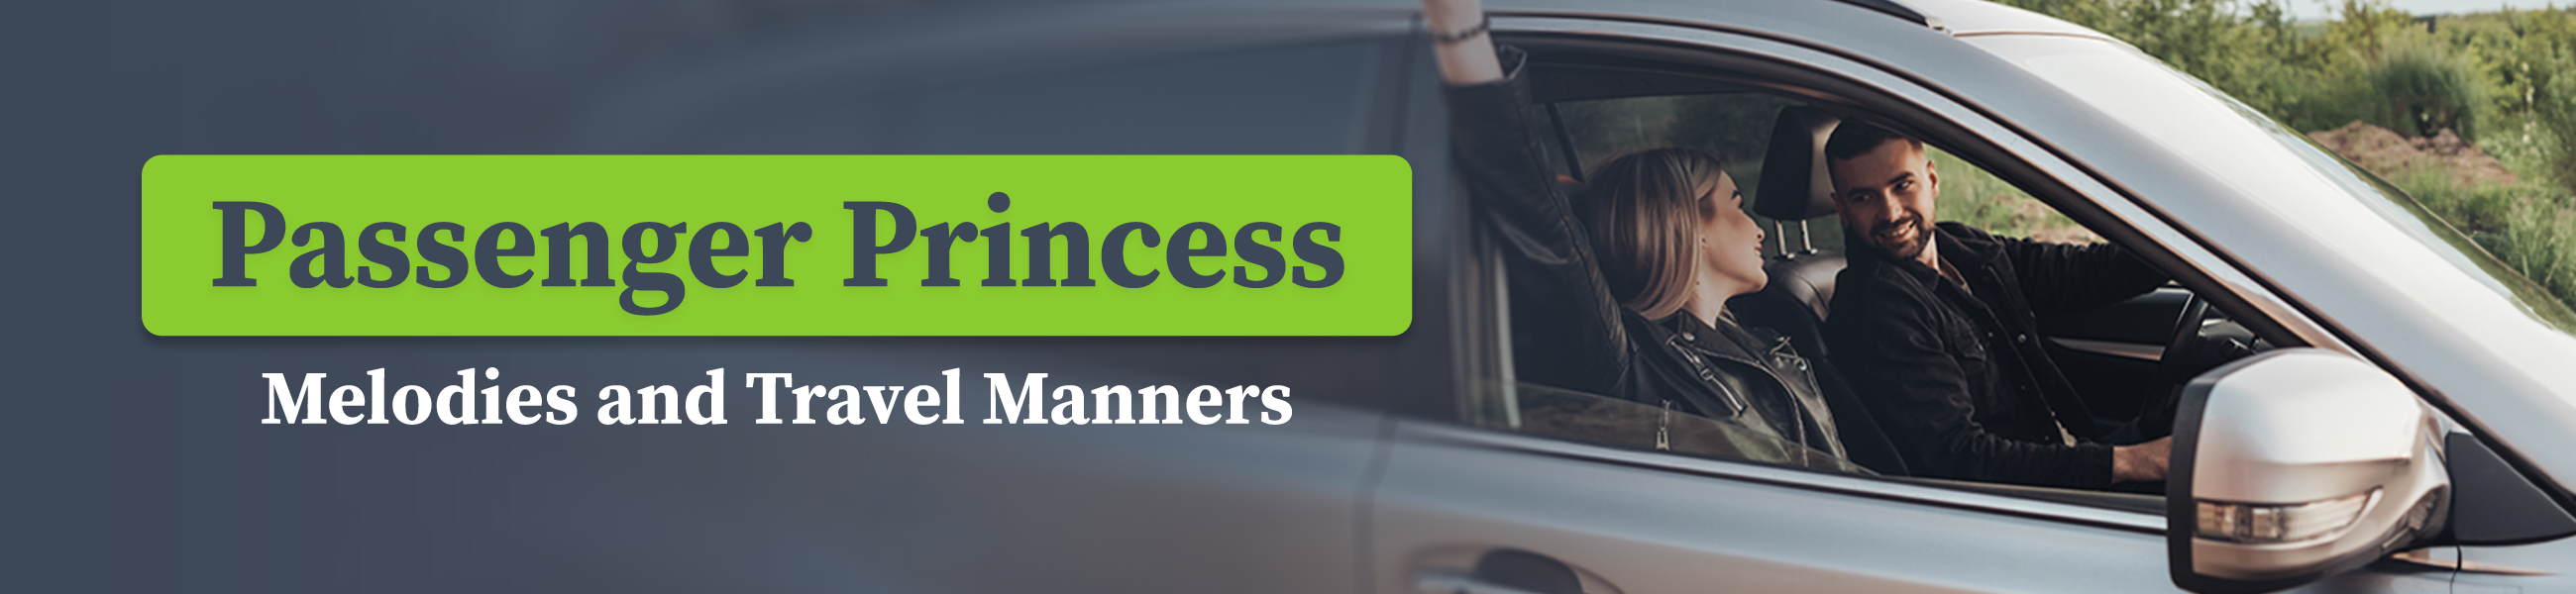 Passenger Princess Analysis Header